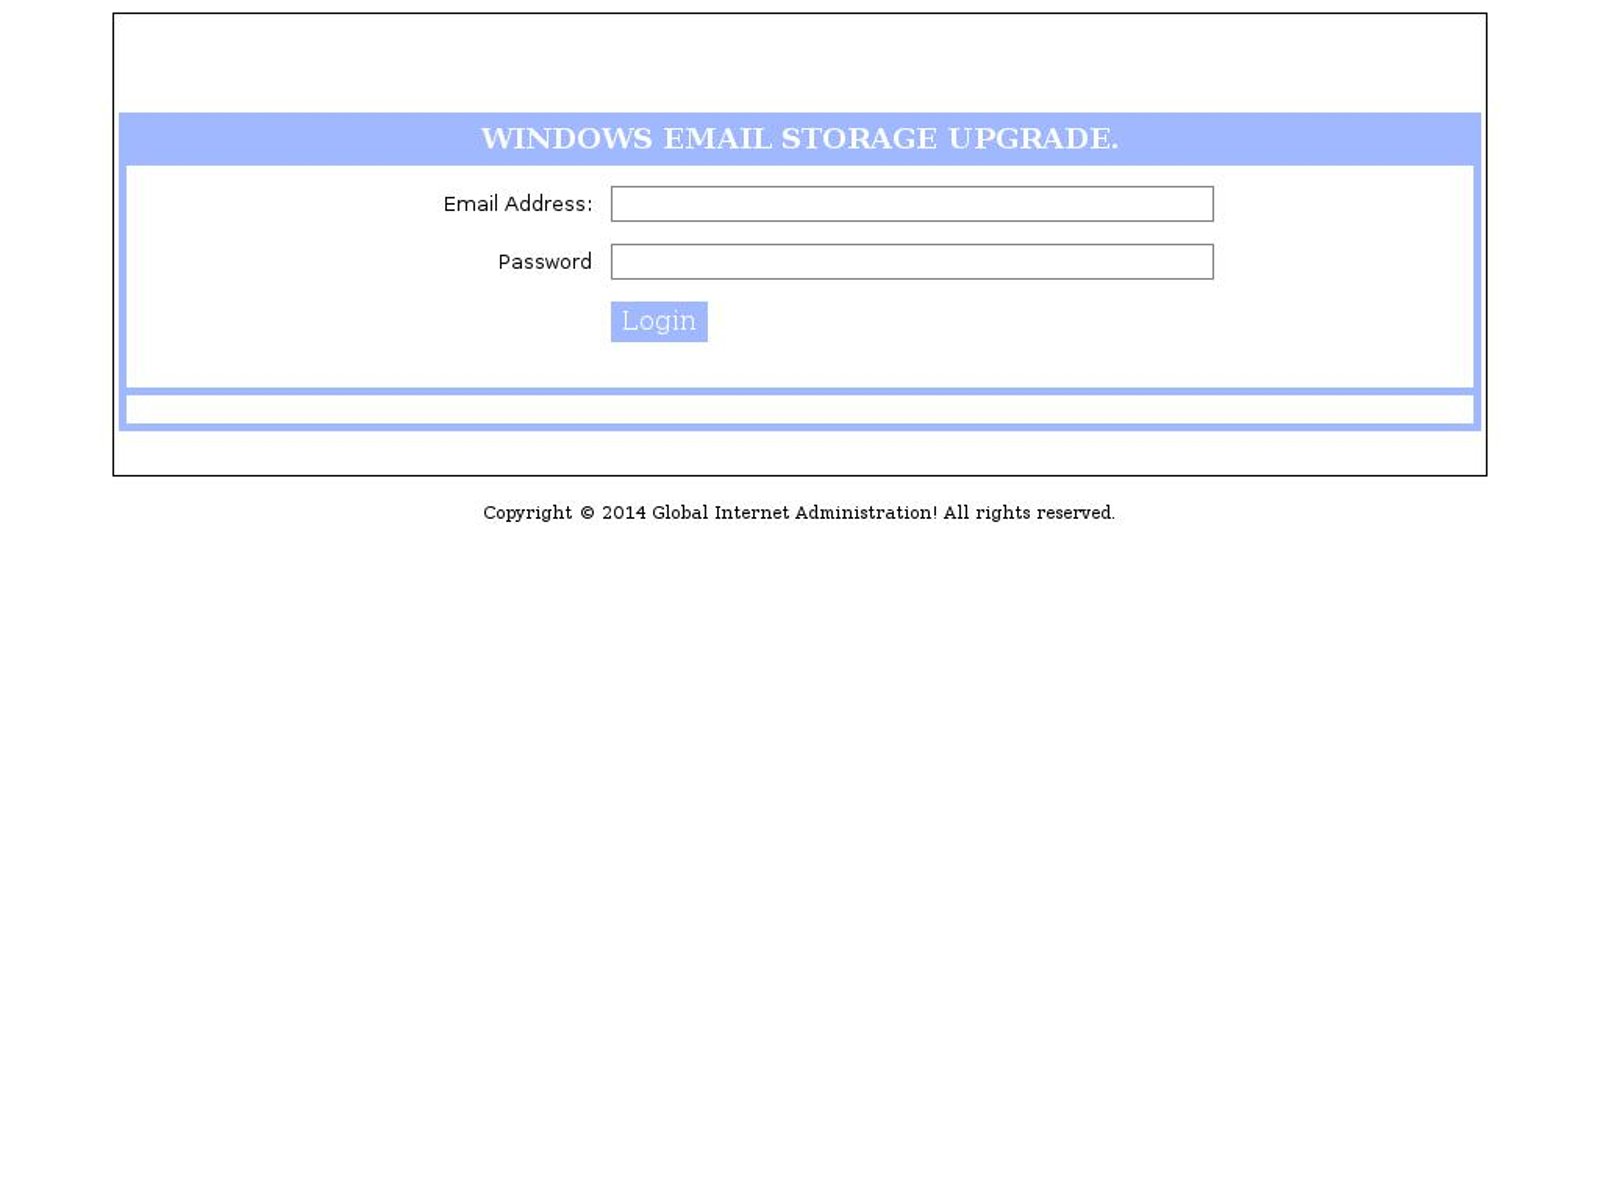 MailShark Your Mailbox Qouta is Full Upgrade Visit Website